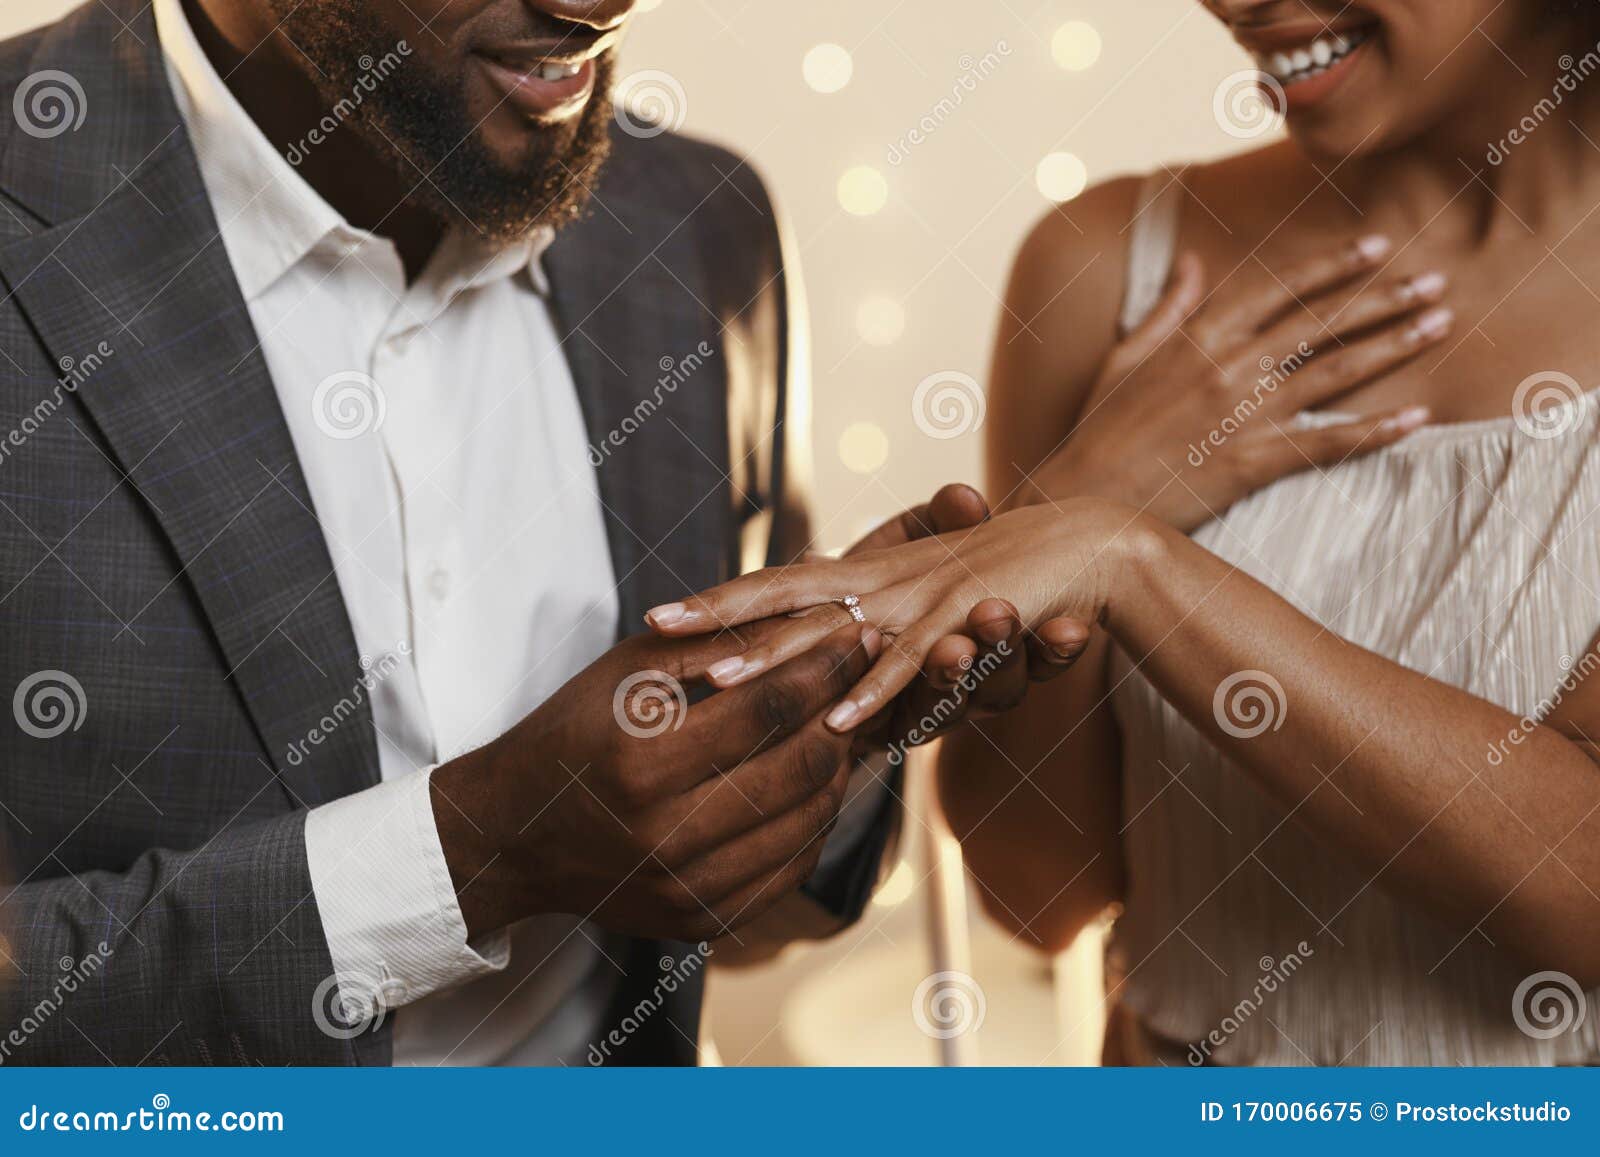 Black Man Putting Ring On His Woman Finger Stock Image